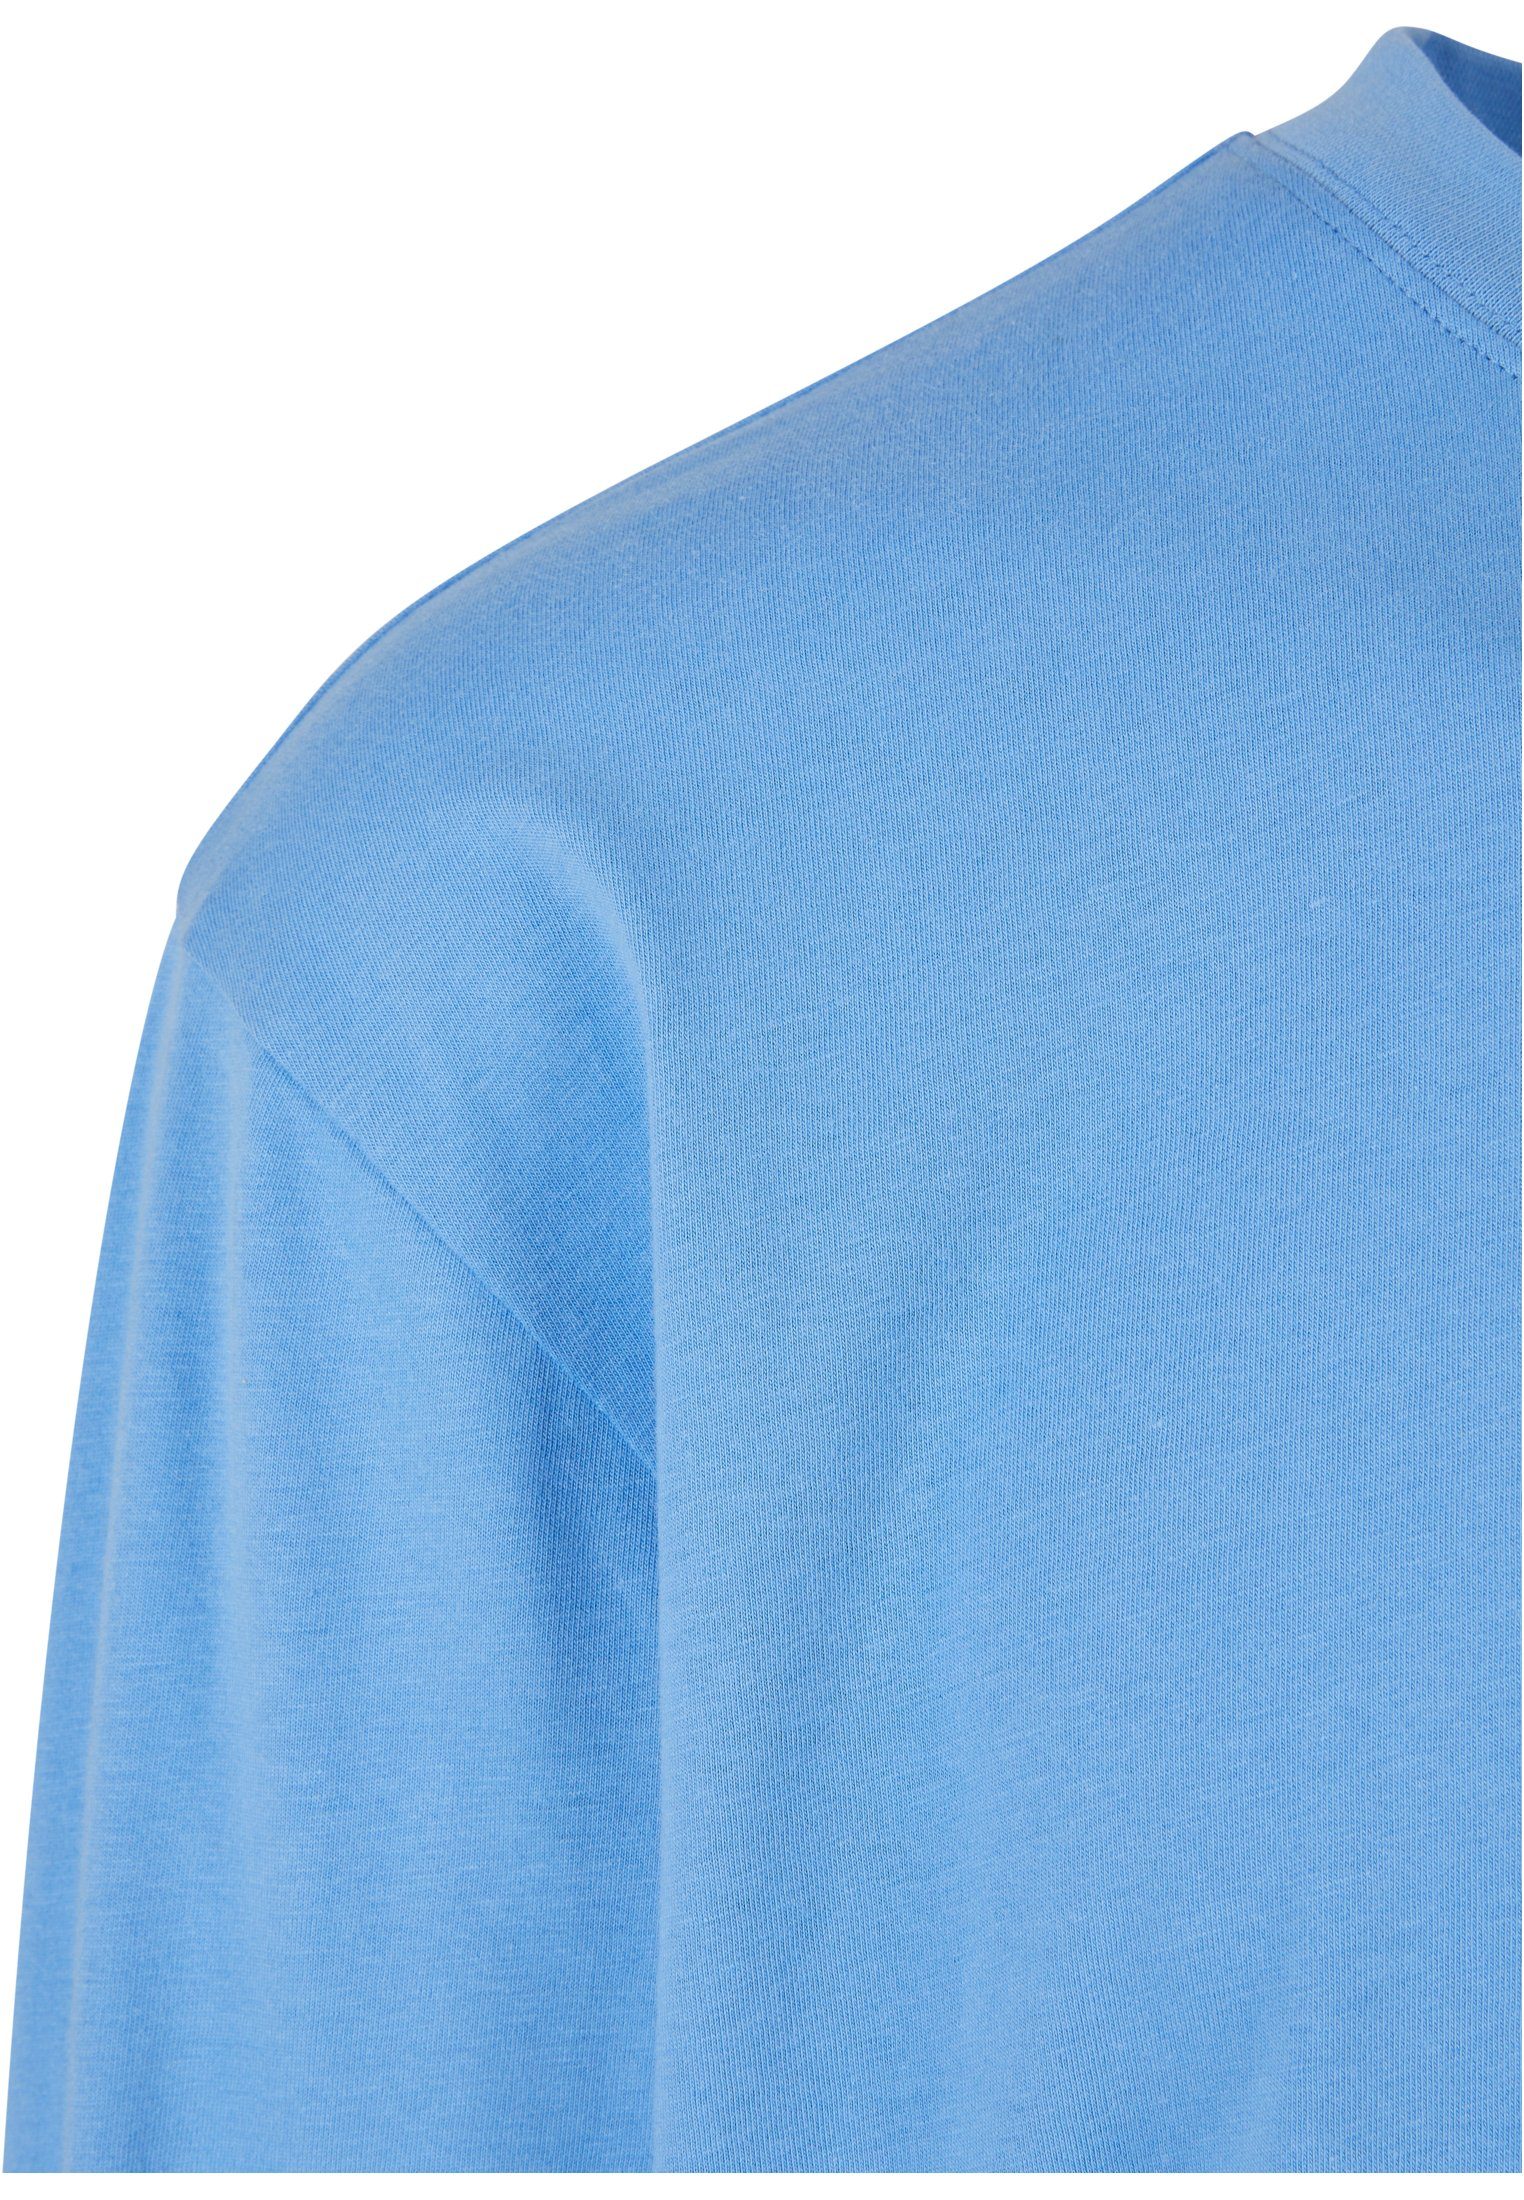 (1-tlg) Tall Tee T-Shirt L/S Herren URBAN CLASSICS horizonblue